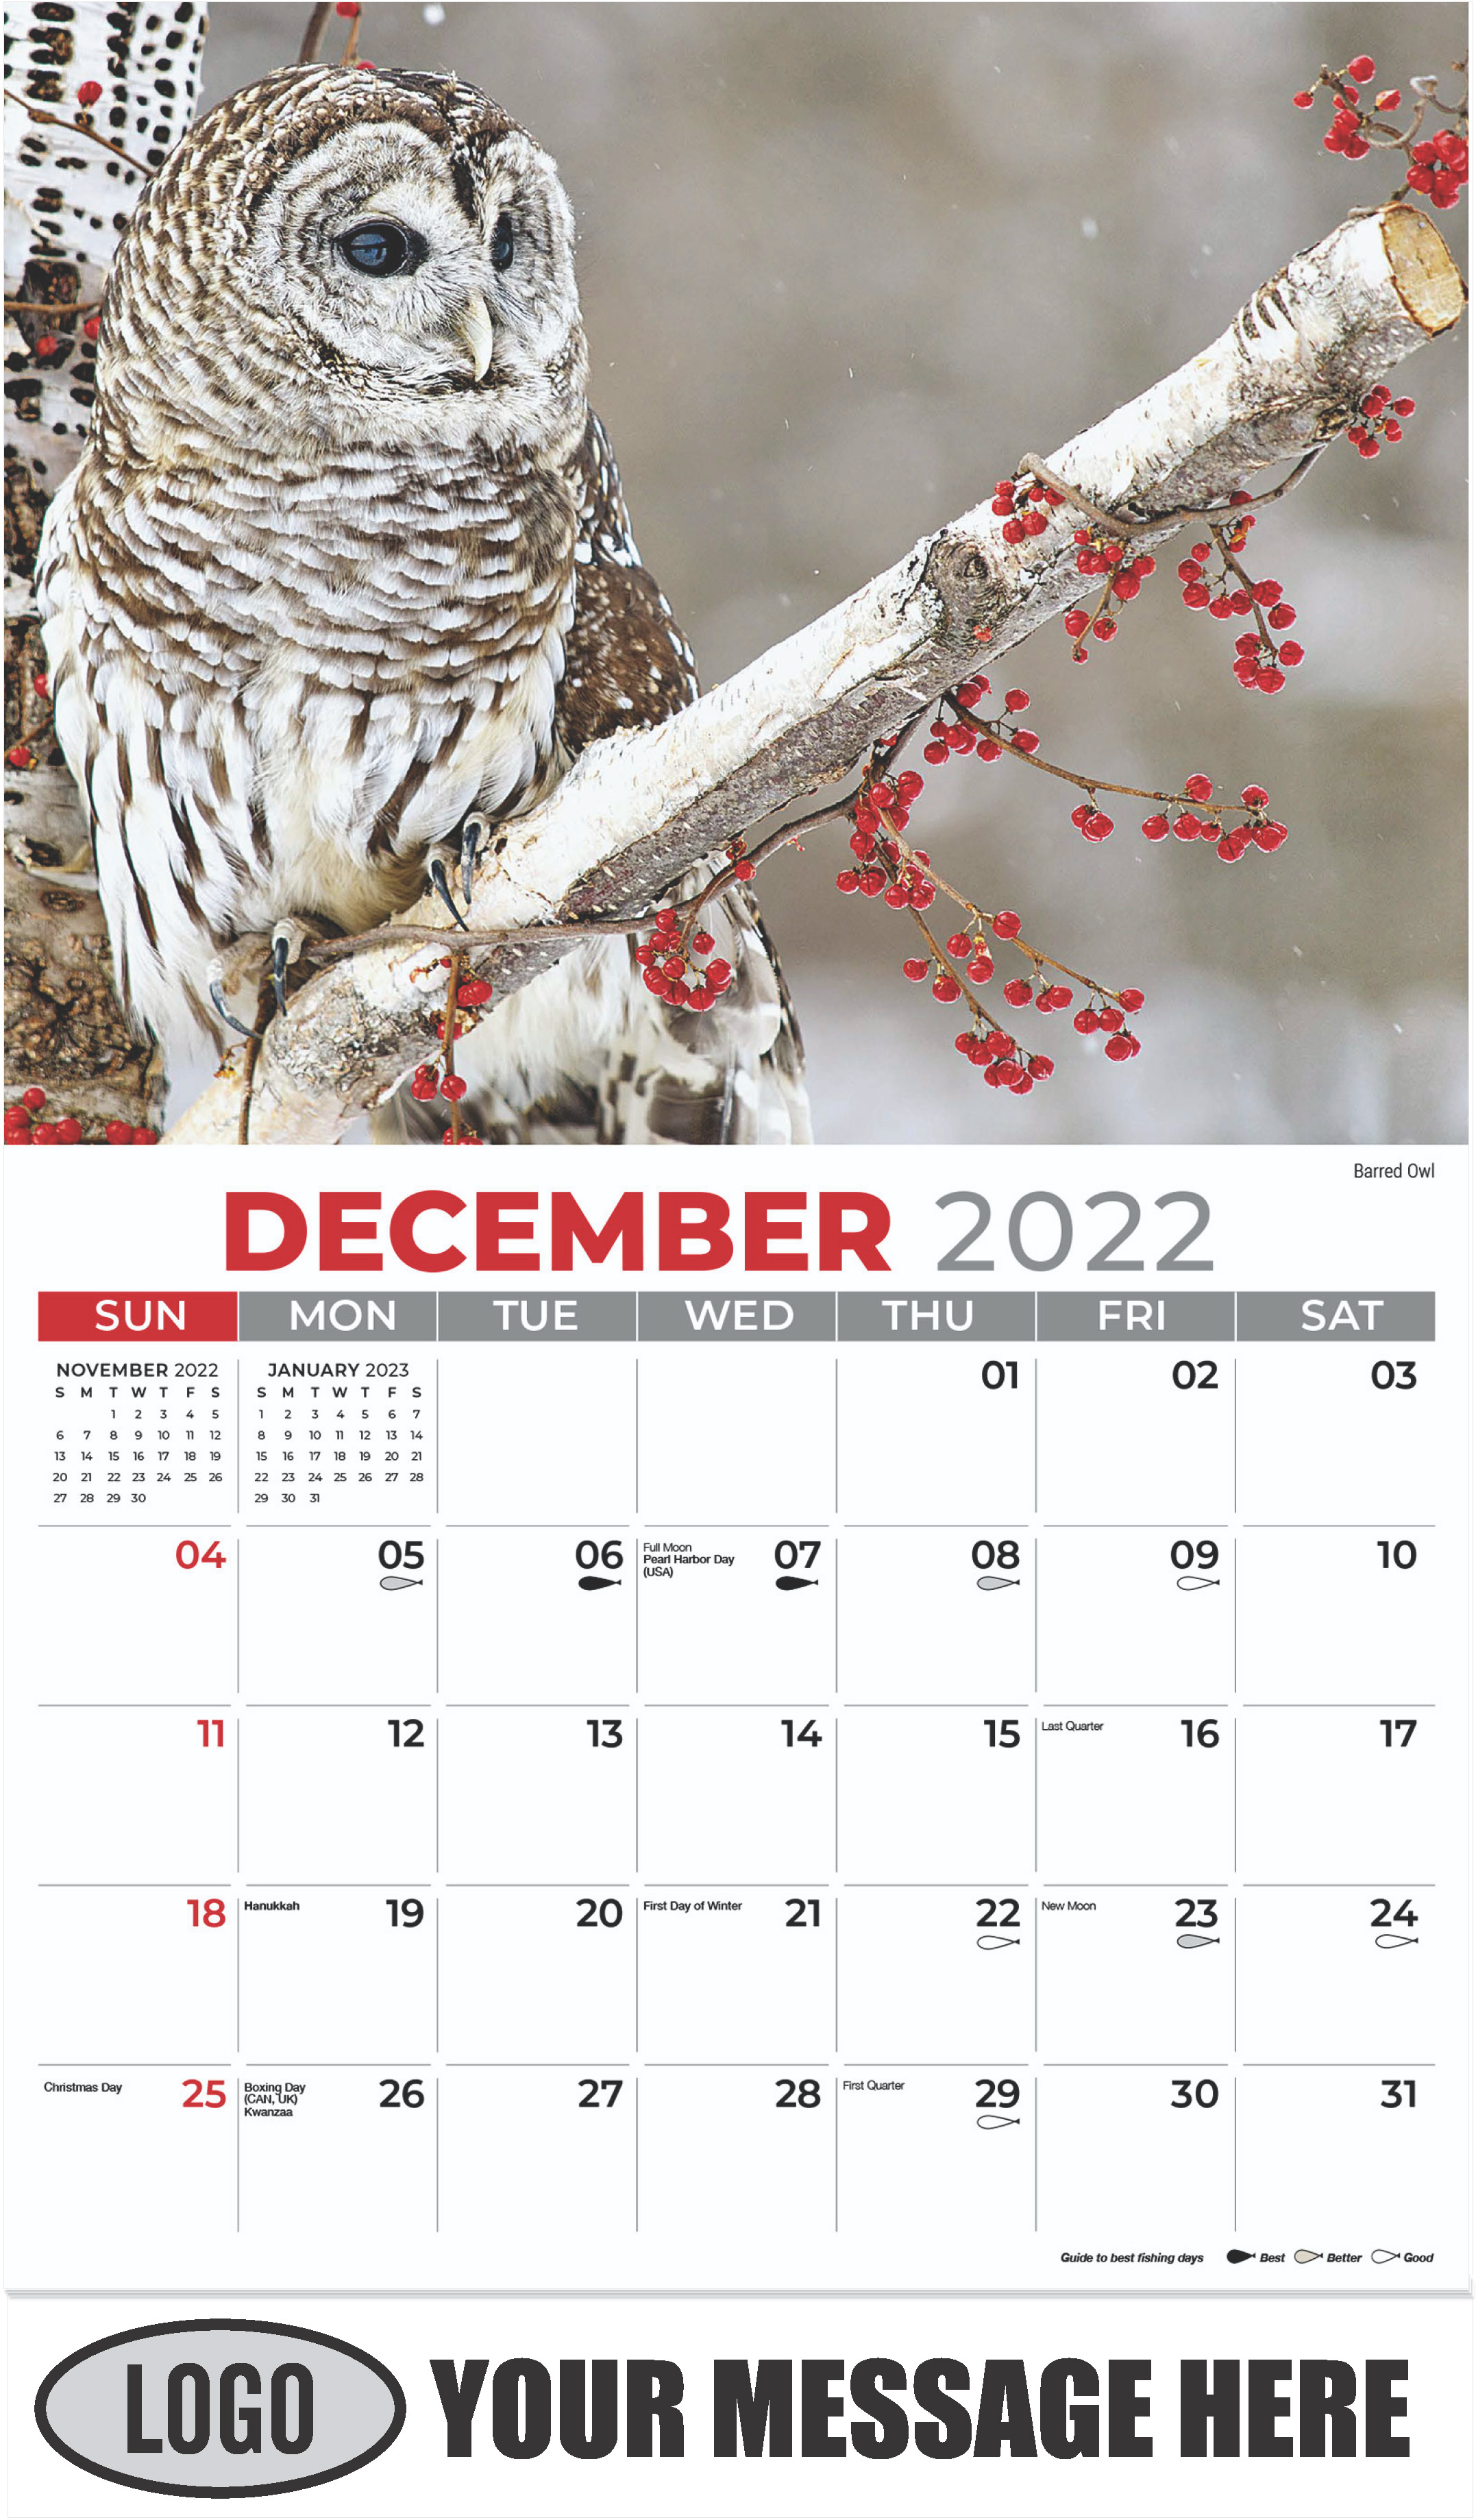 Barred Owl - December 2022 - North American Wildlife 2023 Promotional Calendar